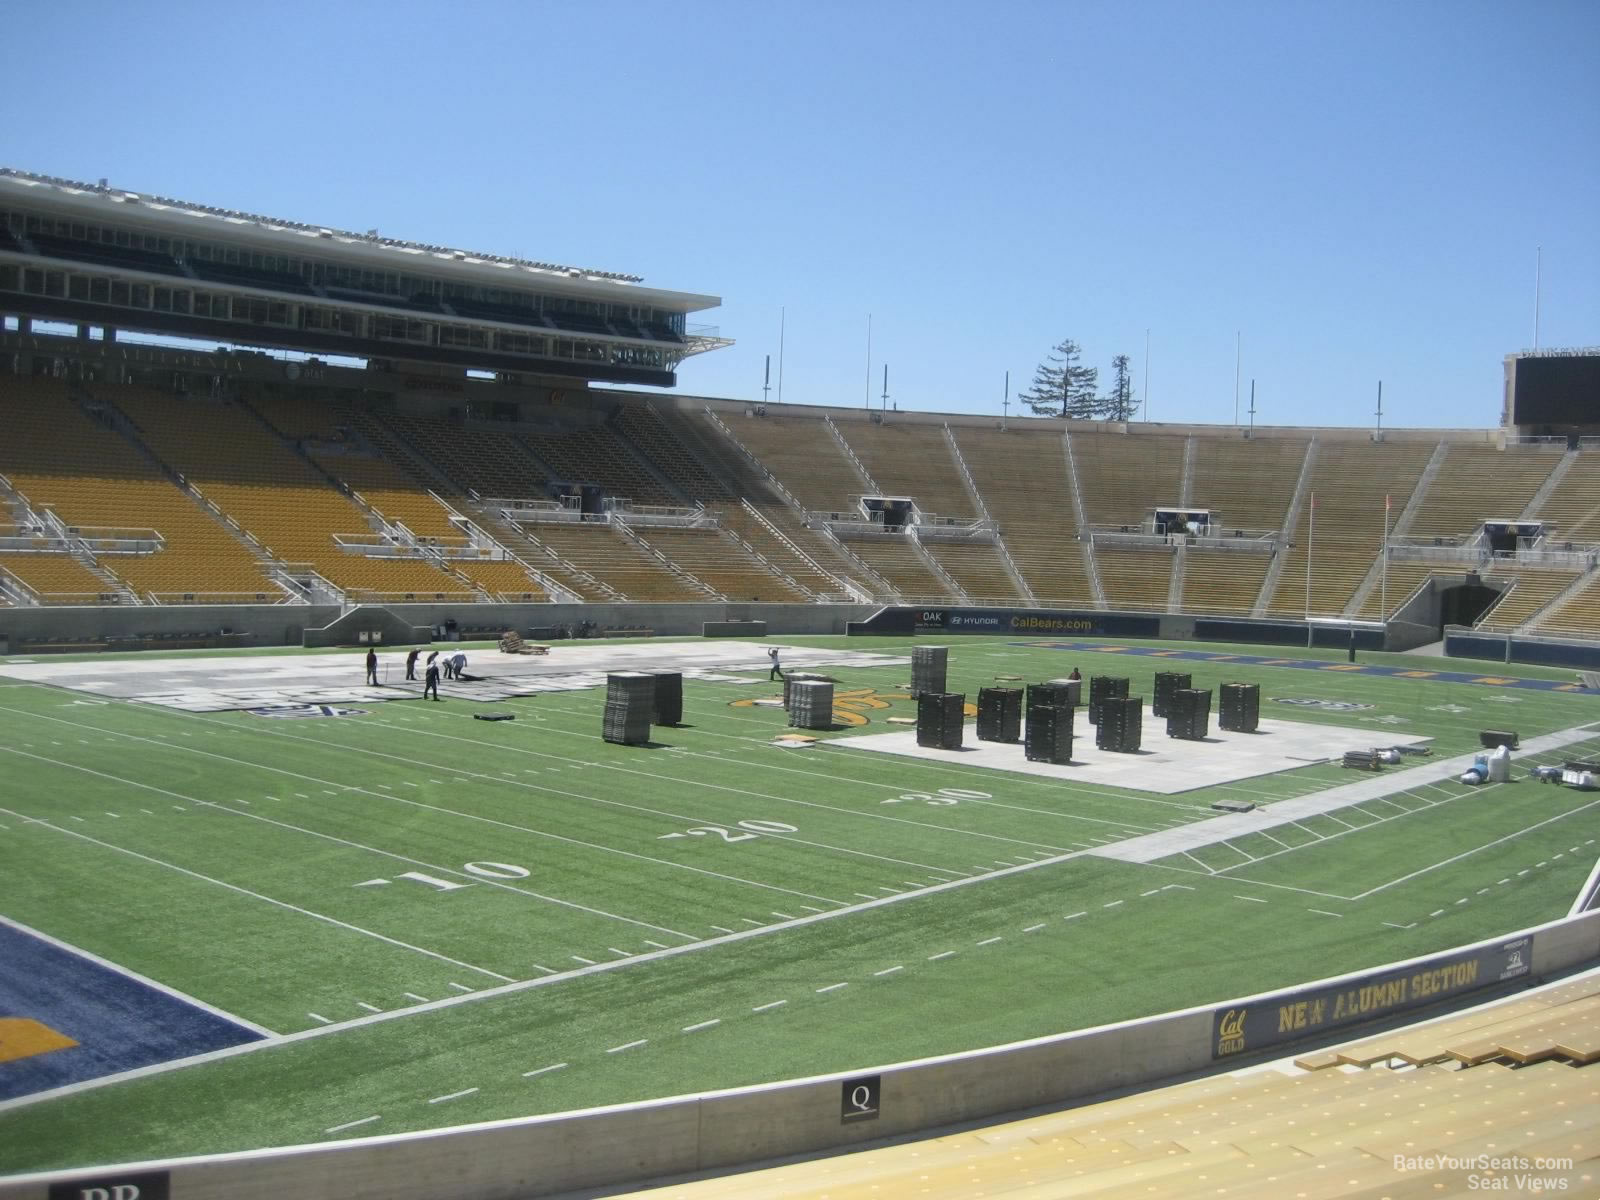 section pp, row 22 seat view  - memorial stadium (cal)